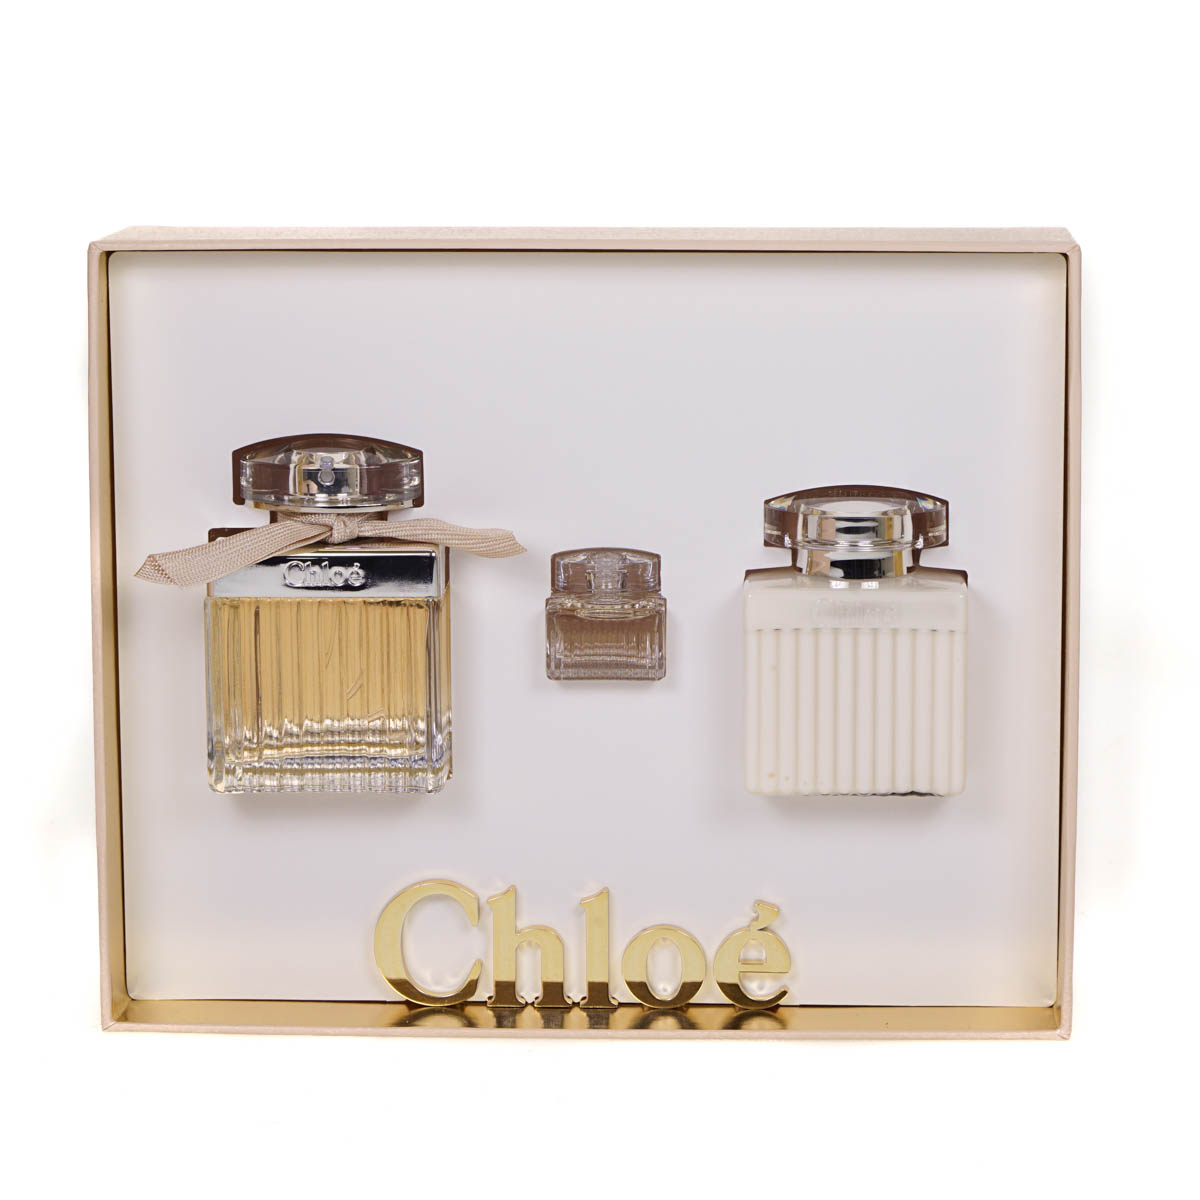 Chloe Signature 75ml Eau De Parfum EDP Perfume Gift Set RRP 89.00